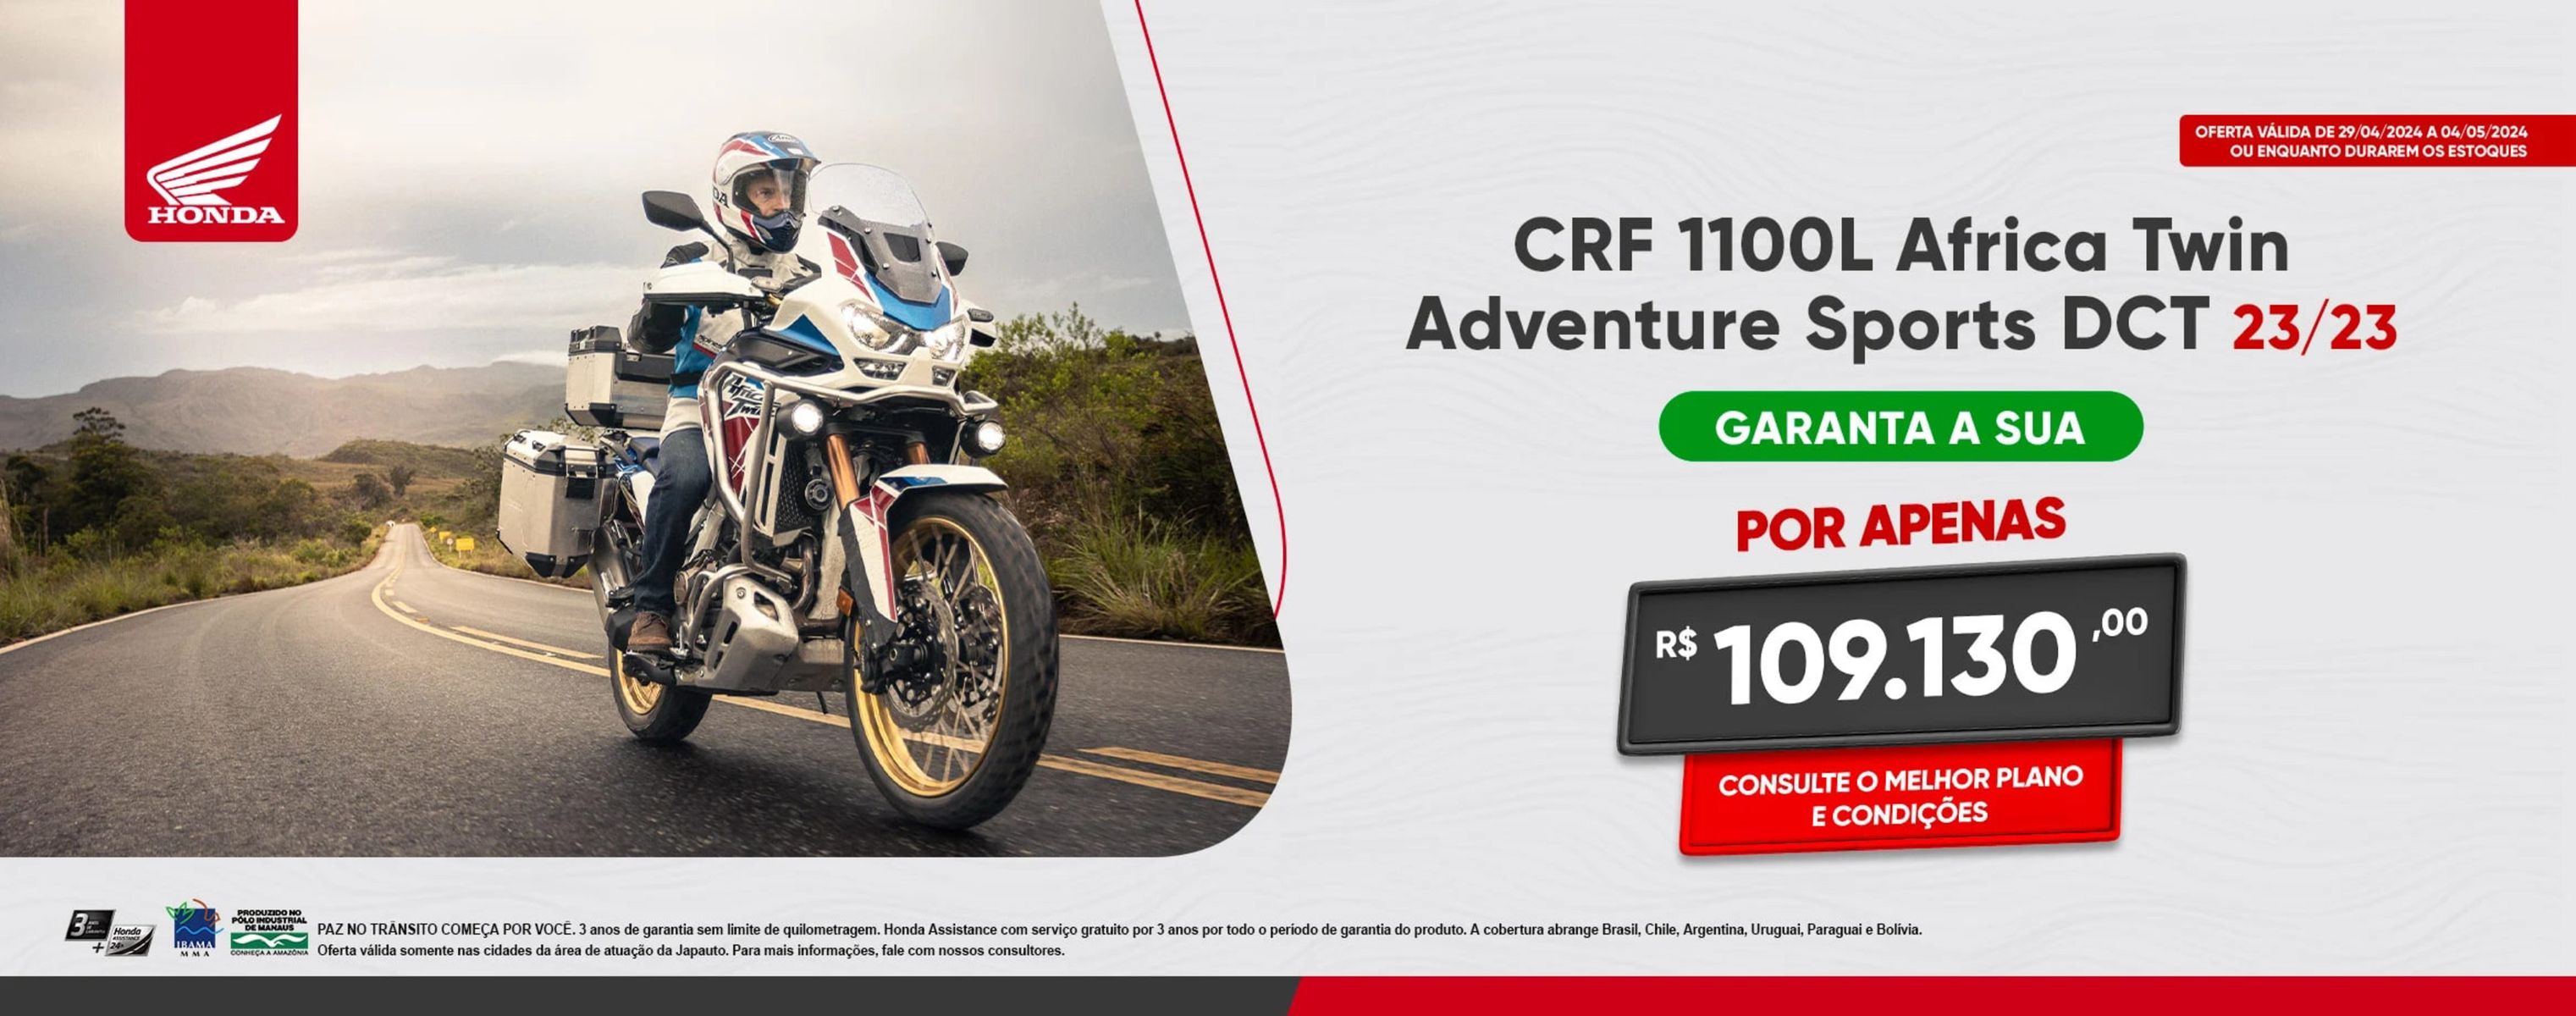 CRF 1100L Africa Twin Adventure Sports DCT - Garanta a Sua!